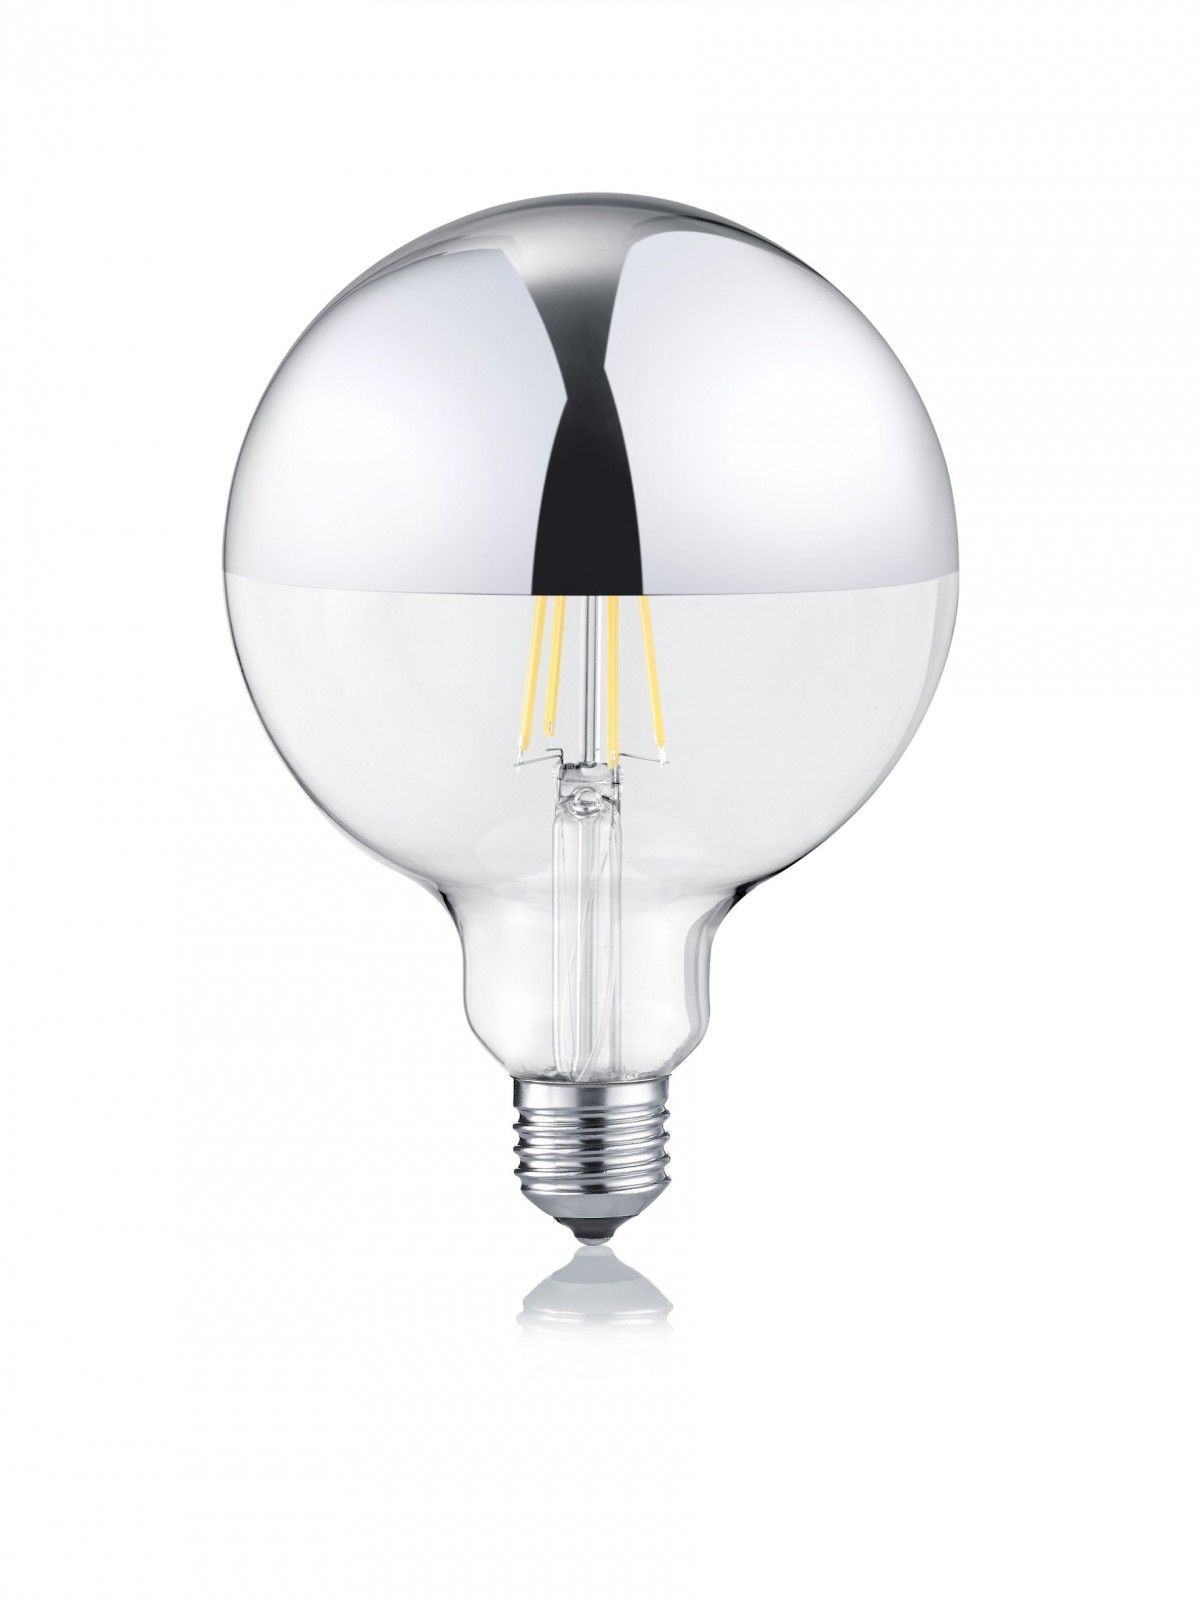 Trio 986-710 LED filametová žárovka Lampe 1x7W | E27 | 680lm | 2700K - Dekolamp s.r.o.